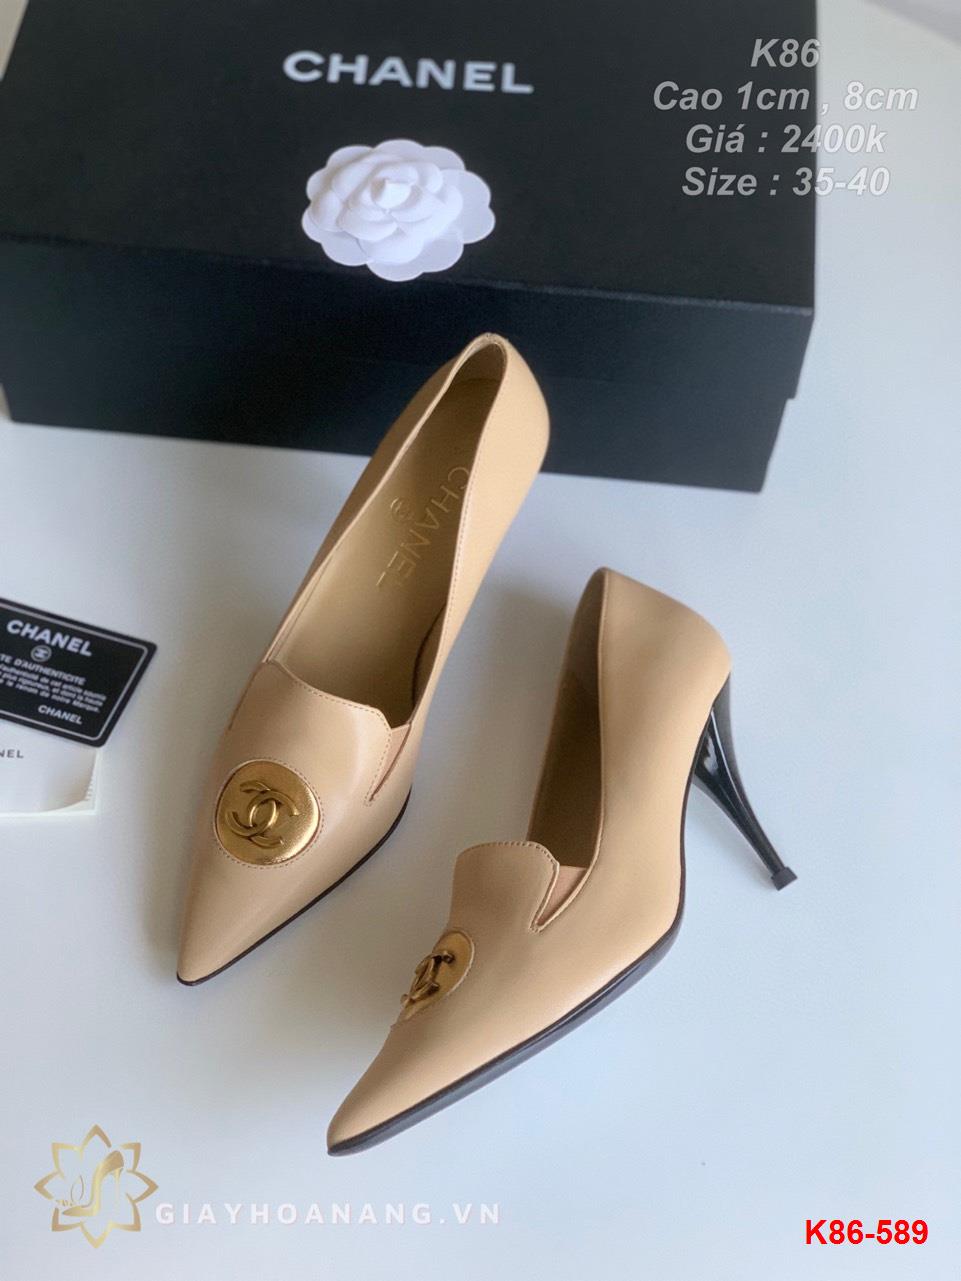 K86-589 Chanel giày cao 1cm , 8cm siêu cấp